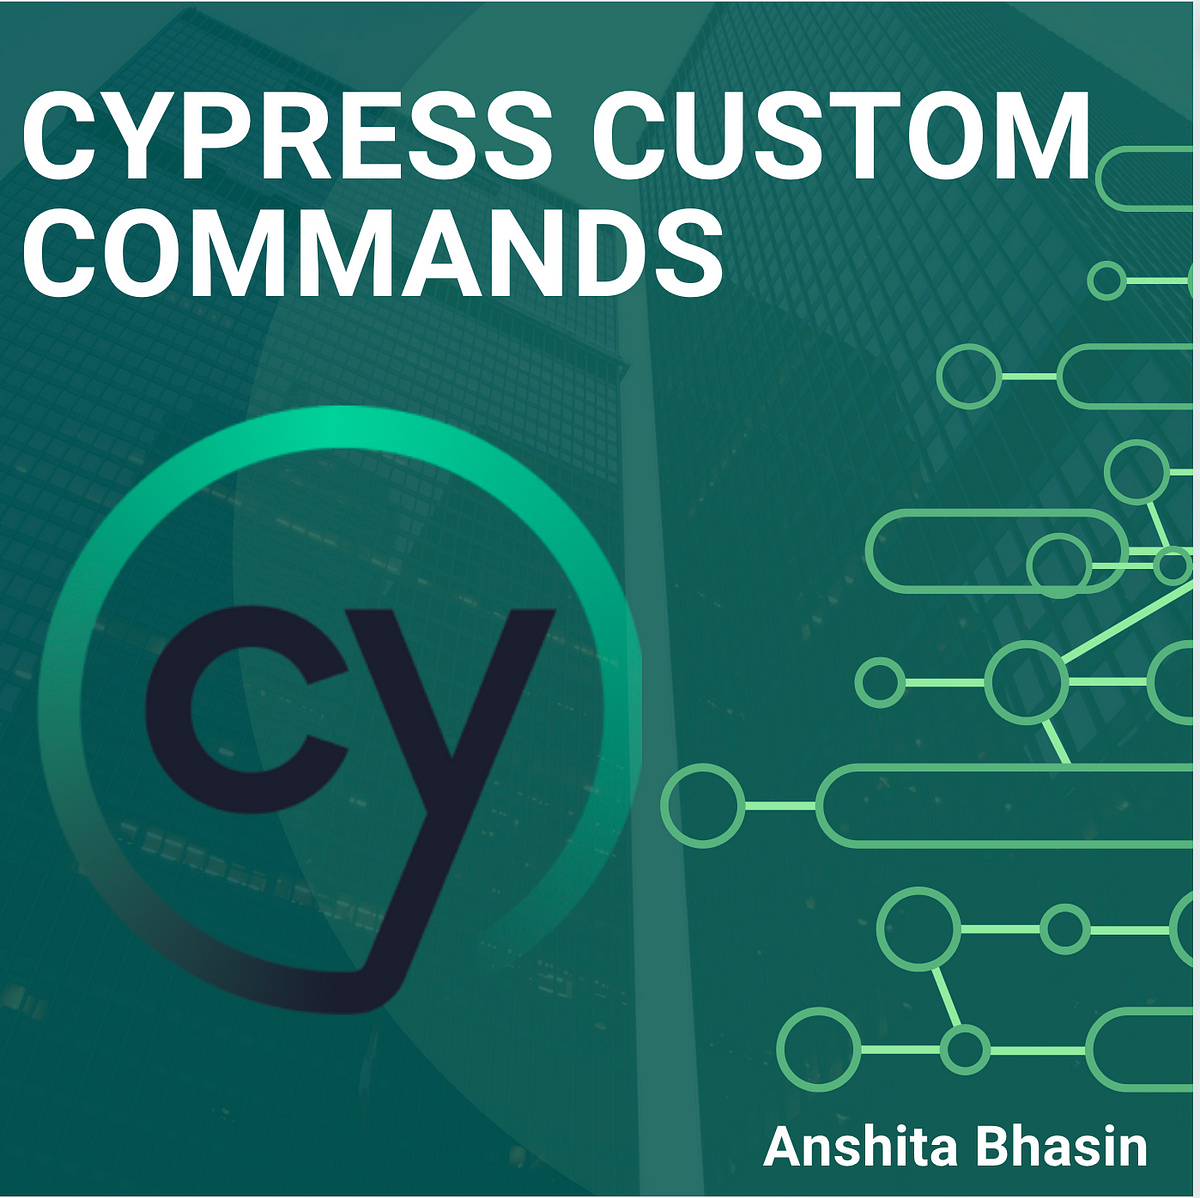 Cypress Custom Commands | by Anshita Bhasin | Medium